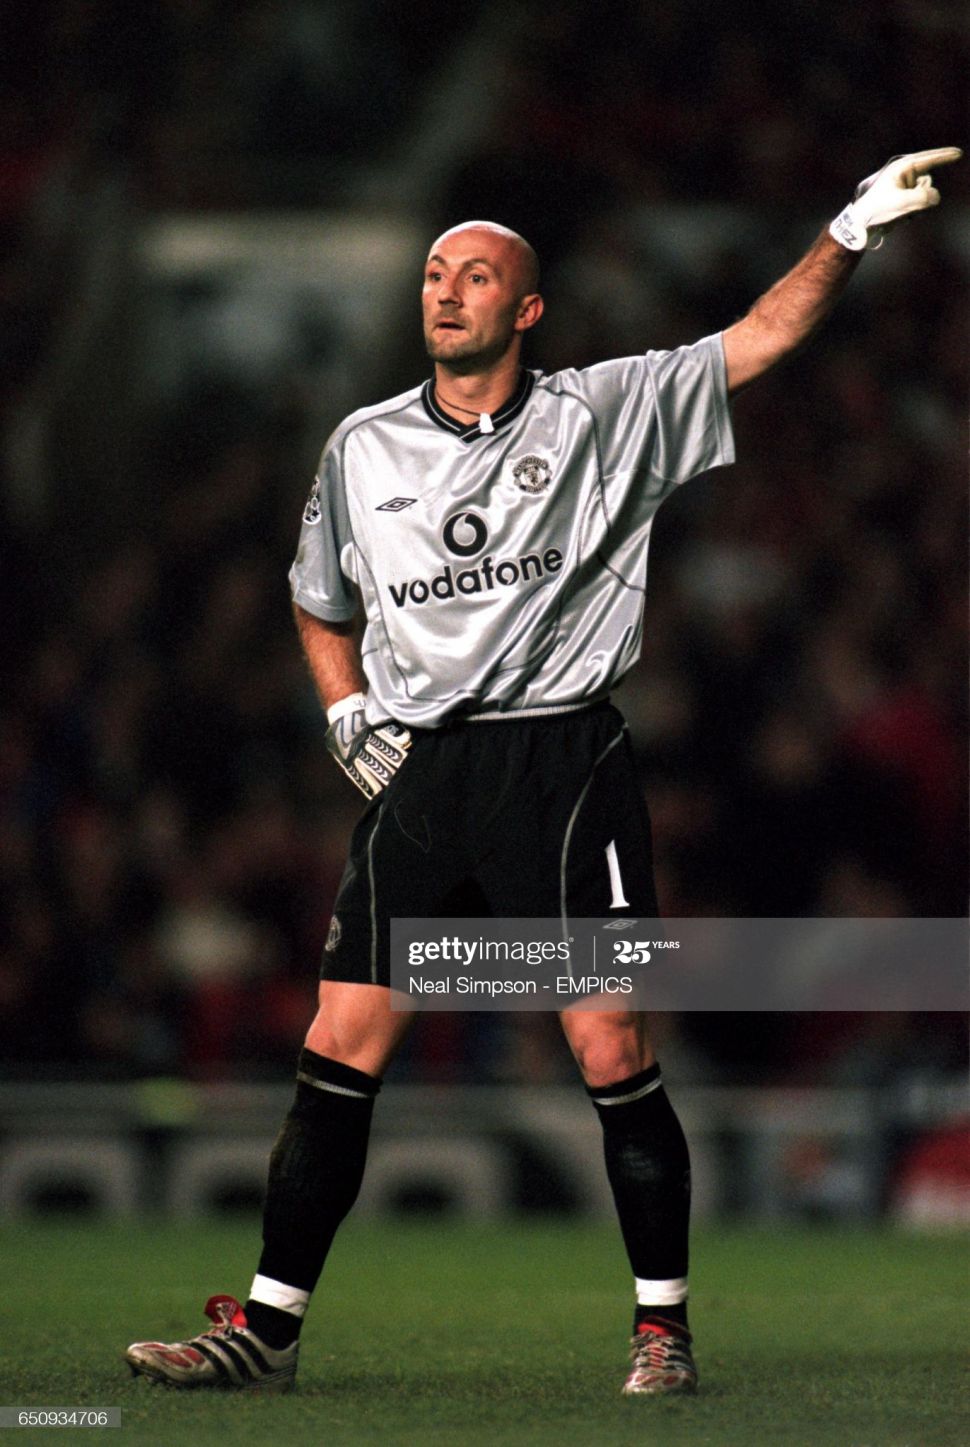 Áo GK Manchester United 2000-2001 away shirt jersey grey goalkeeper